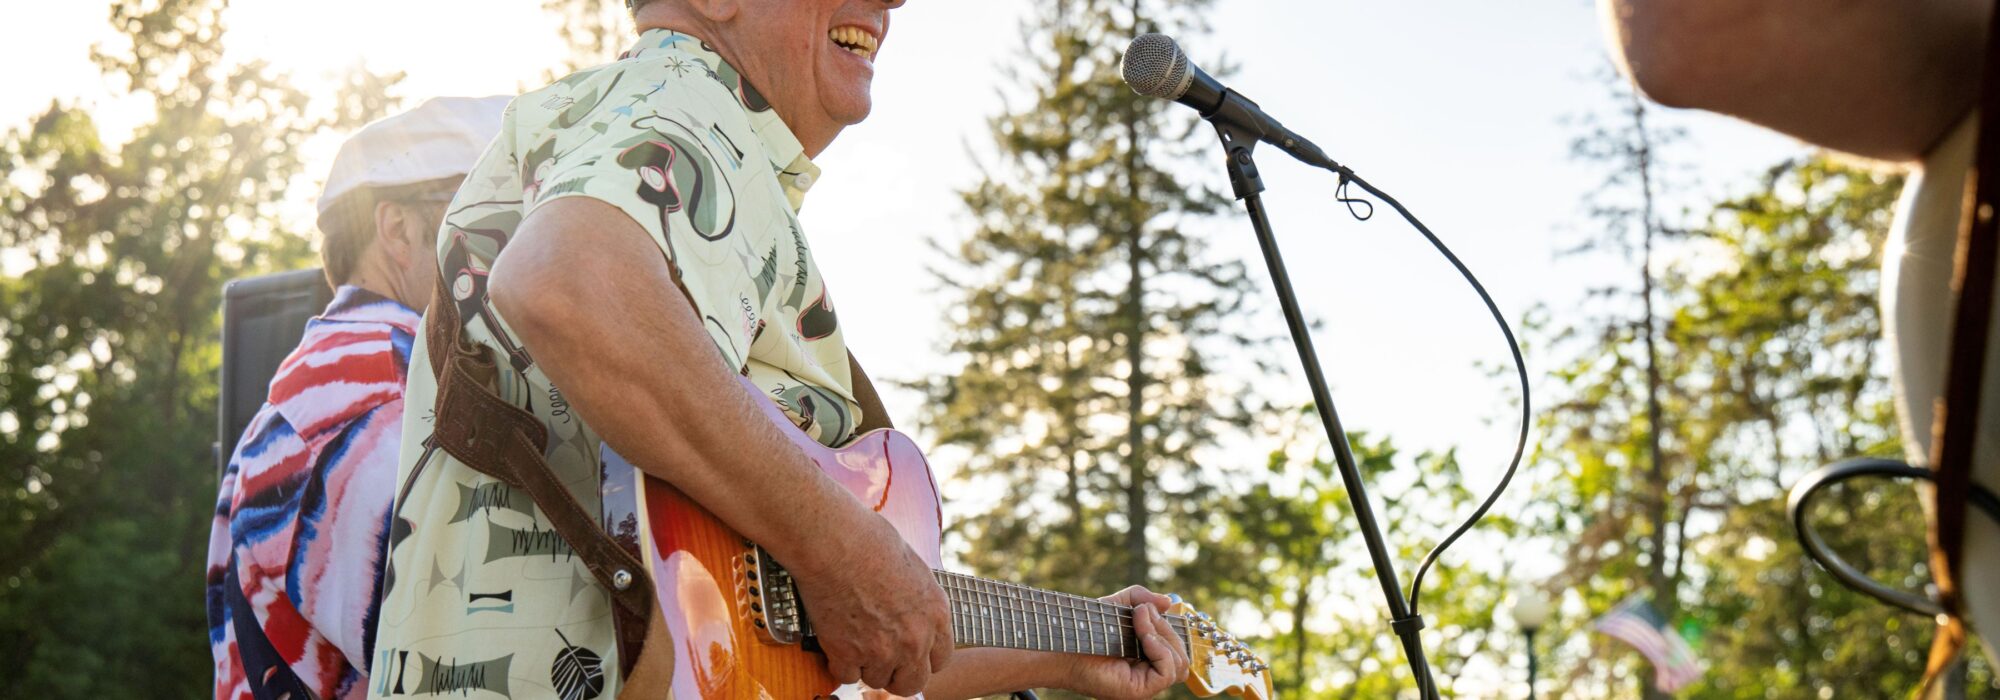 A man plays guitar at an outdoor music event in Virginia, Minnesota